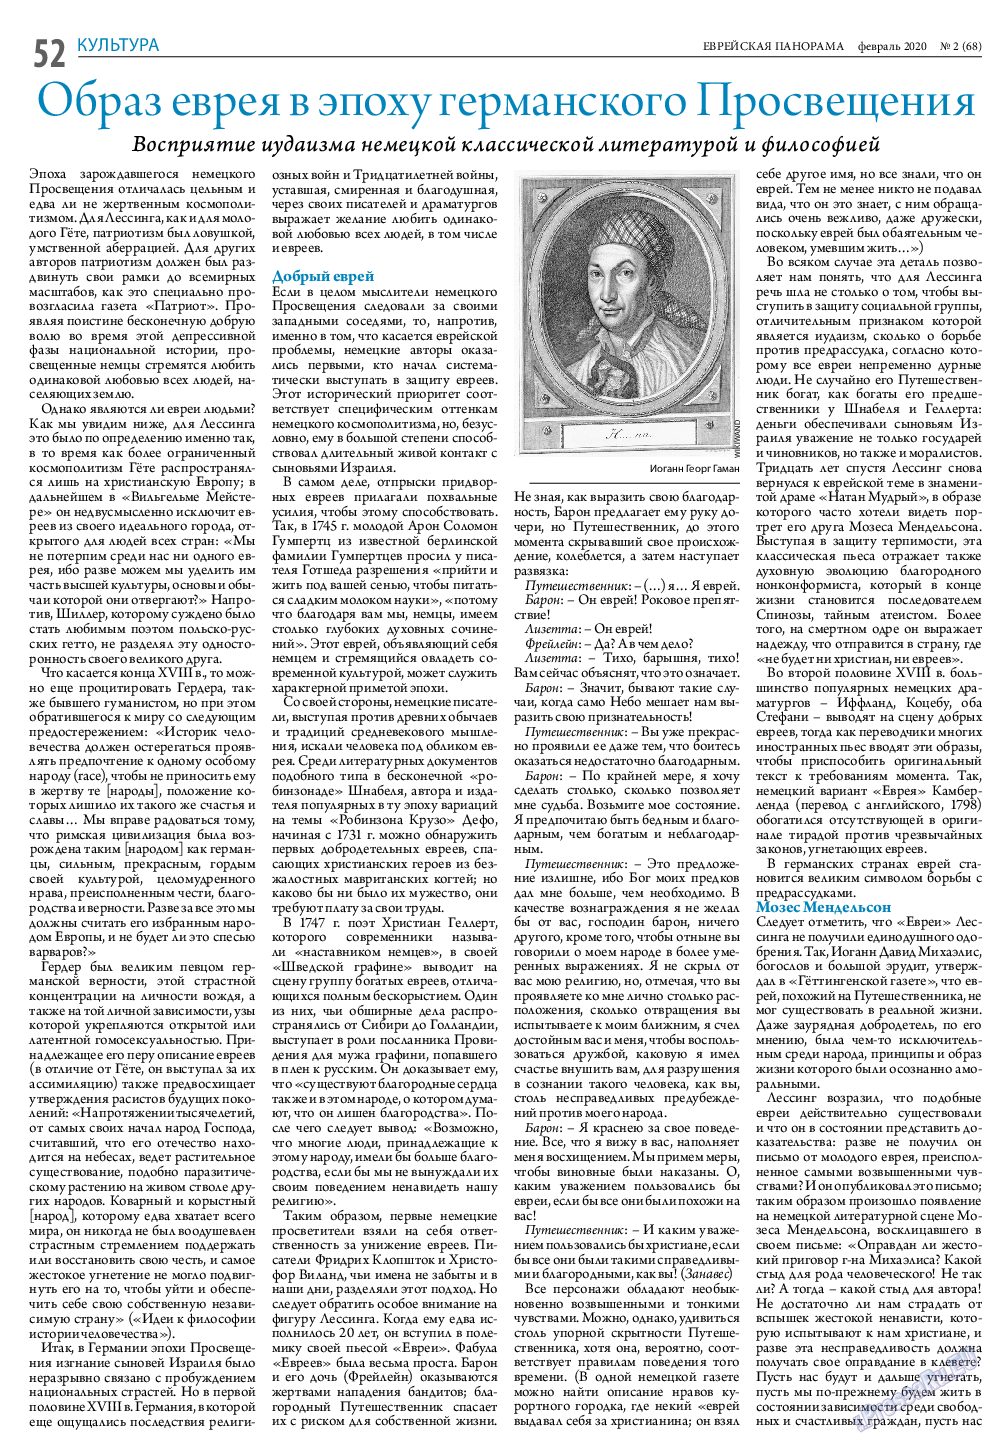 Еврейская панорама, газета. 2020 №2 стр.52